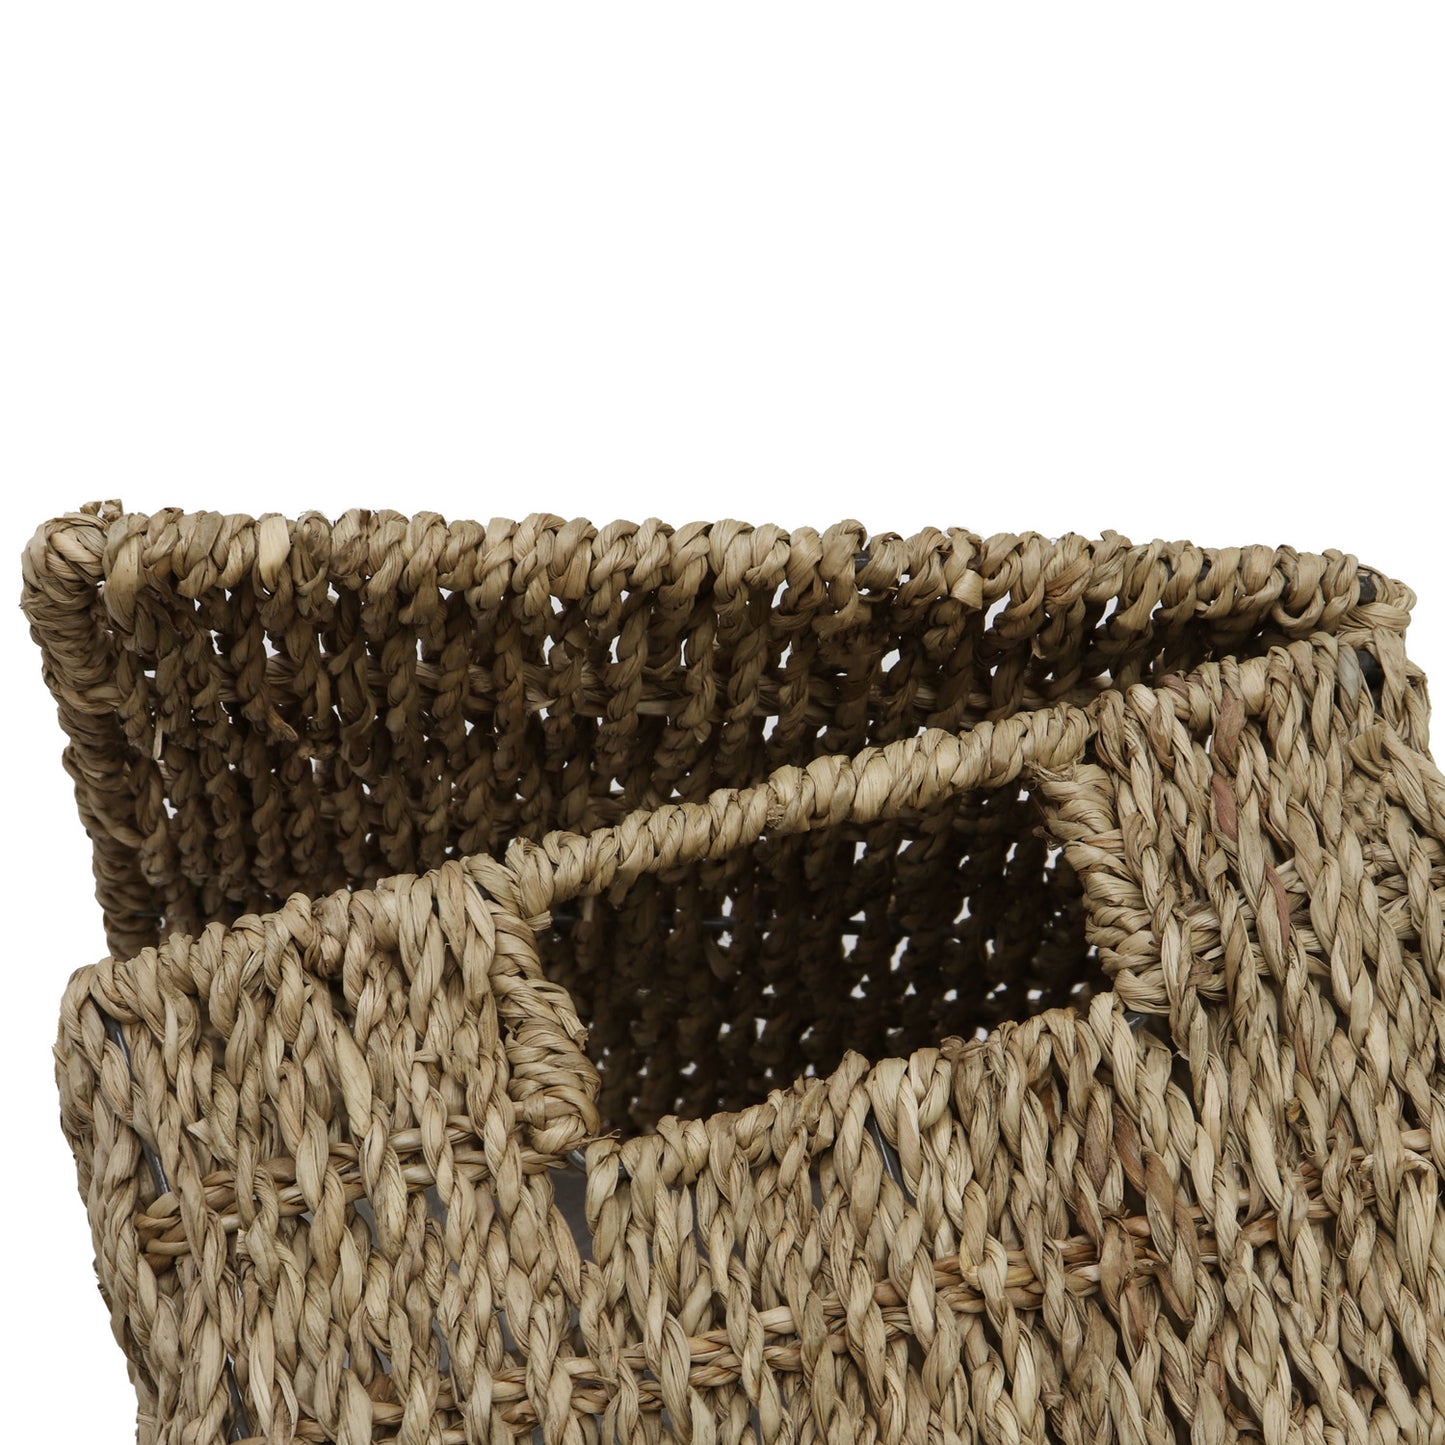 Seagrass Set Of 4 Rectangular Lidded Storage Baskets